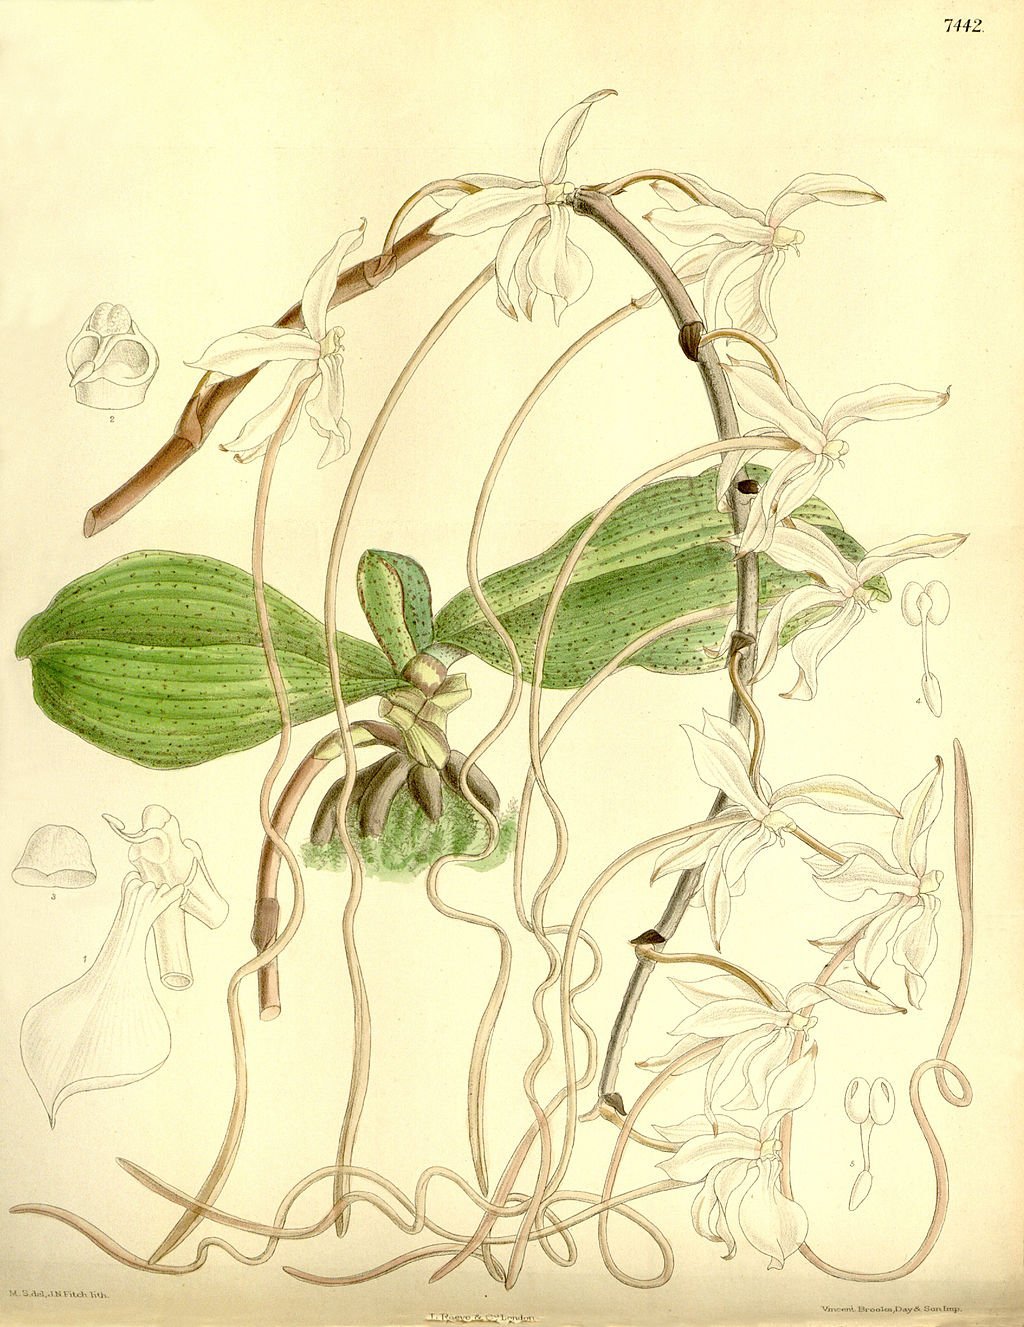 Aerangis kotschyana "Big Plant"